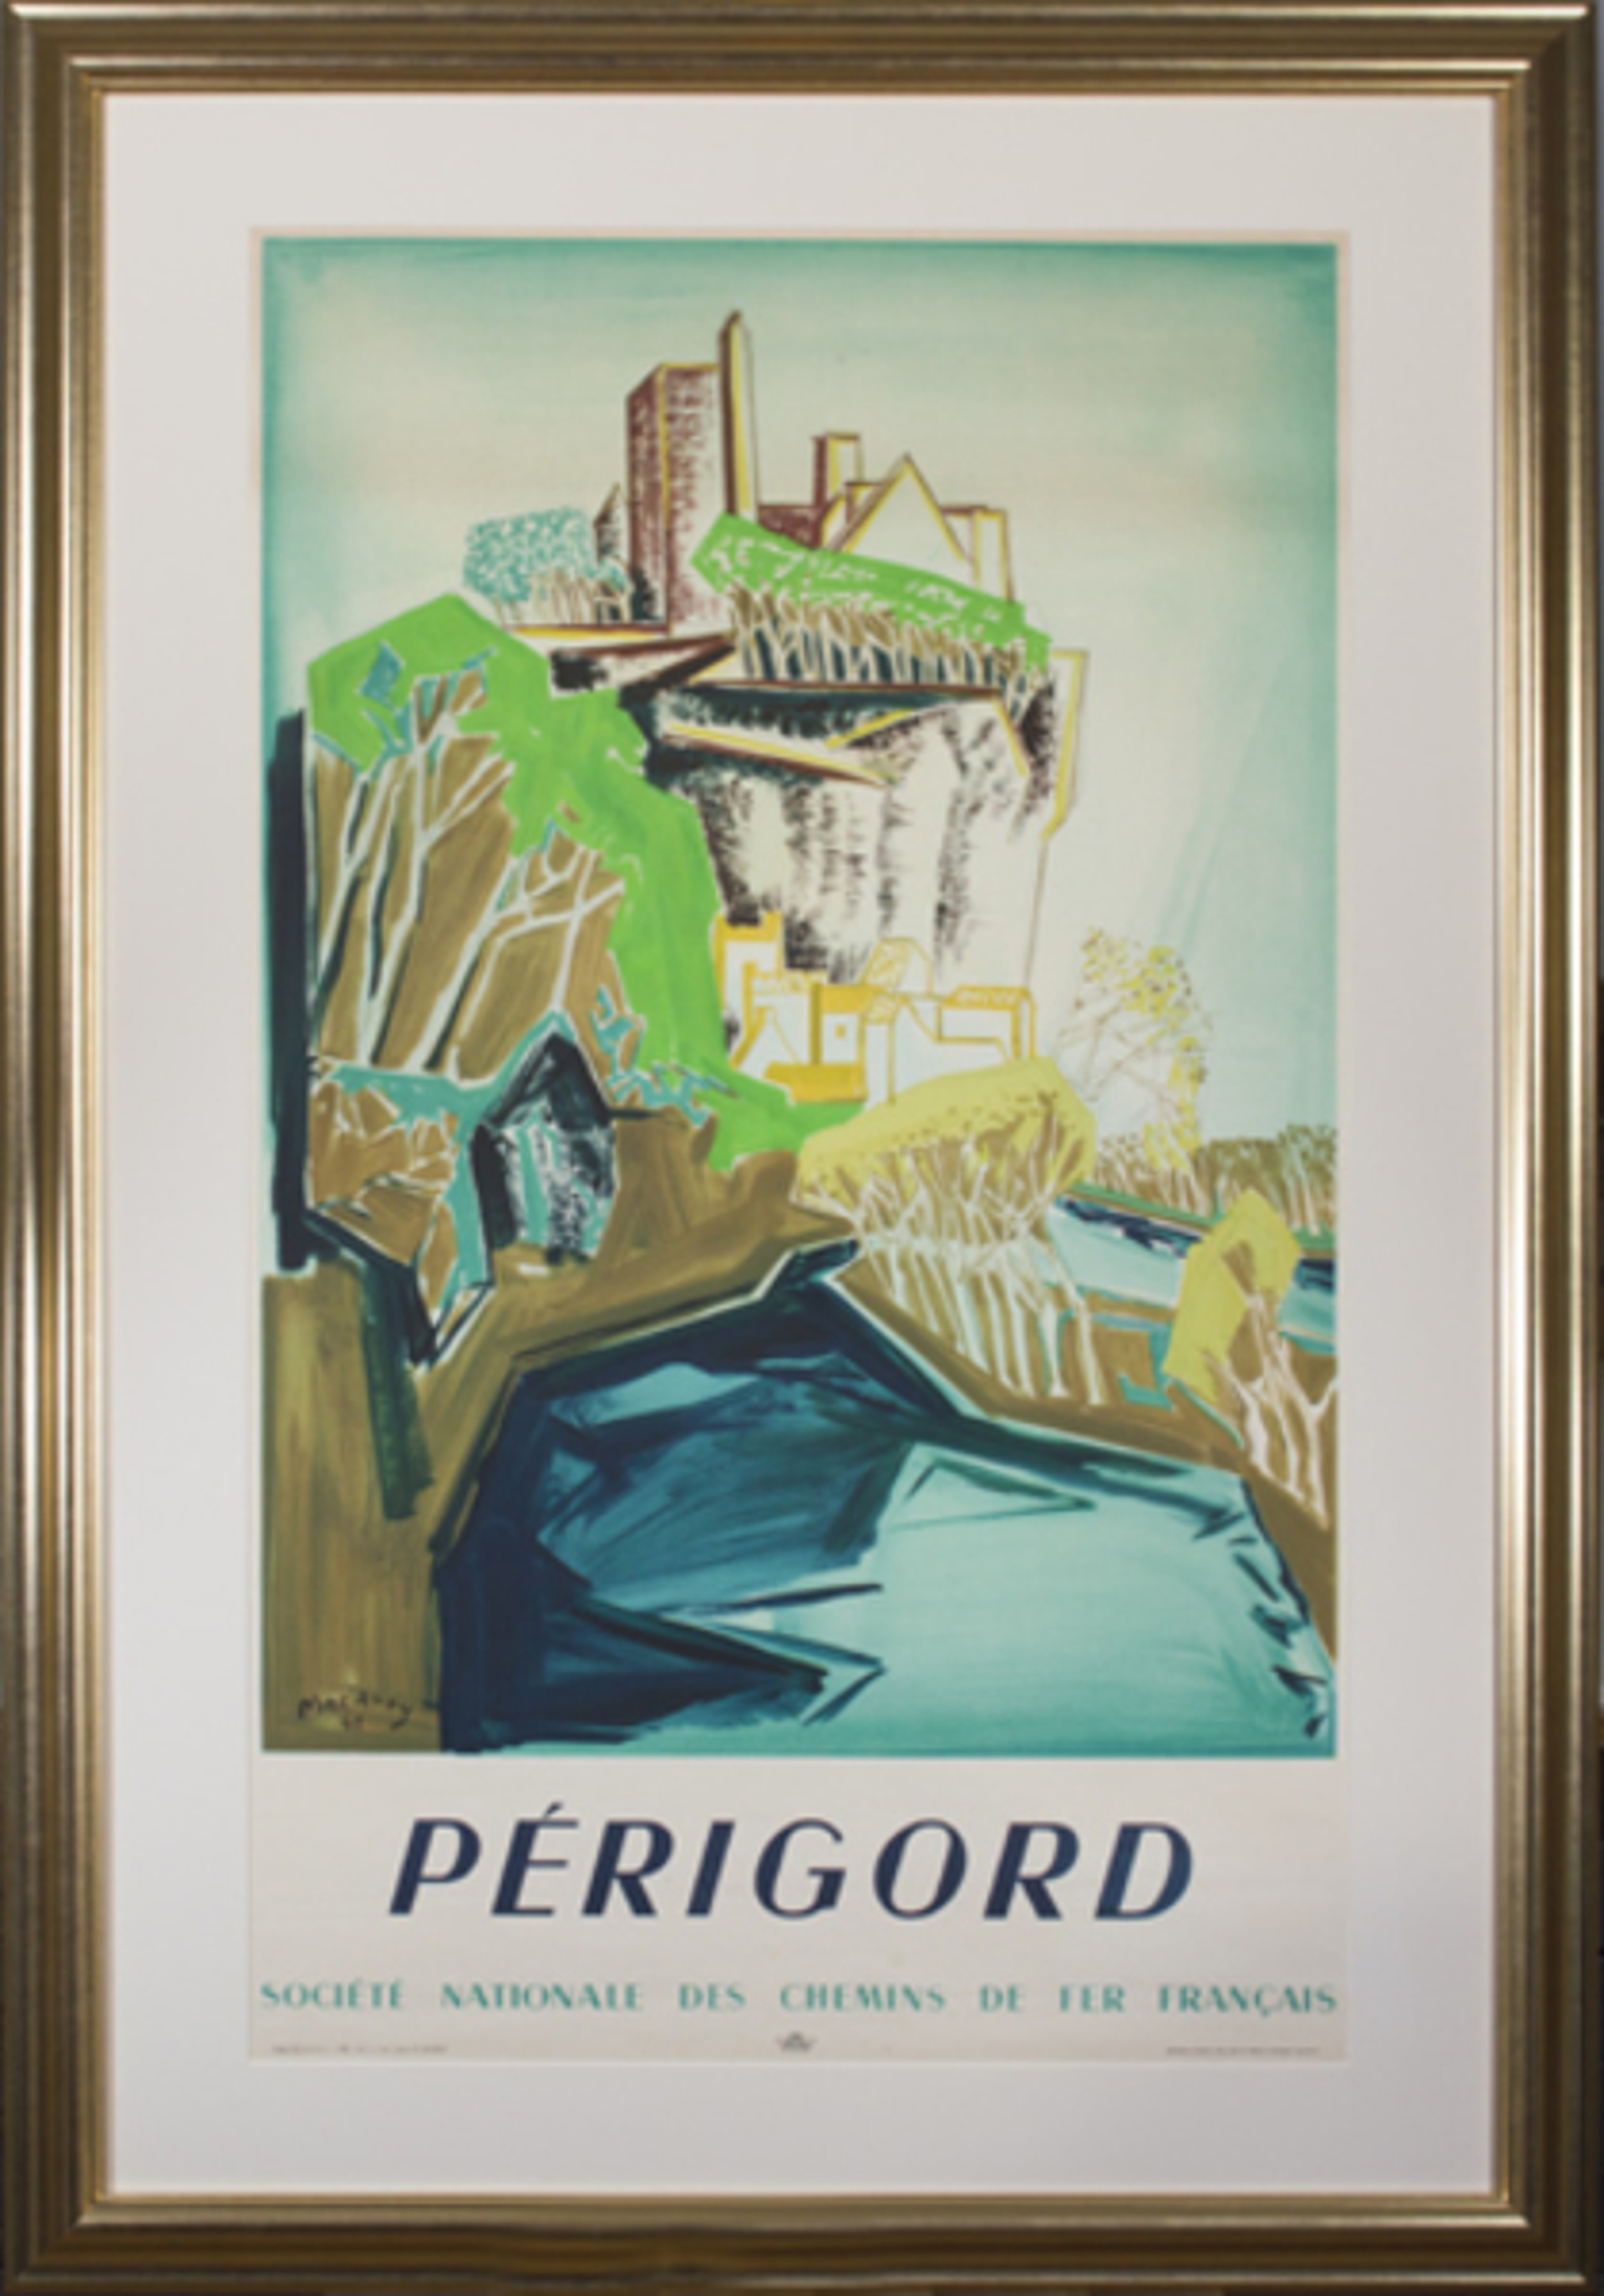 Perigord (Societe Nationale des Chemins de Fer Francais) by Eduoard Georges Mac'Avoy (French)